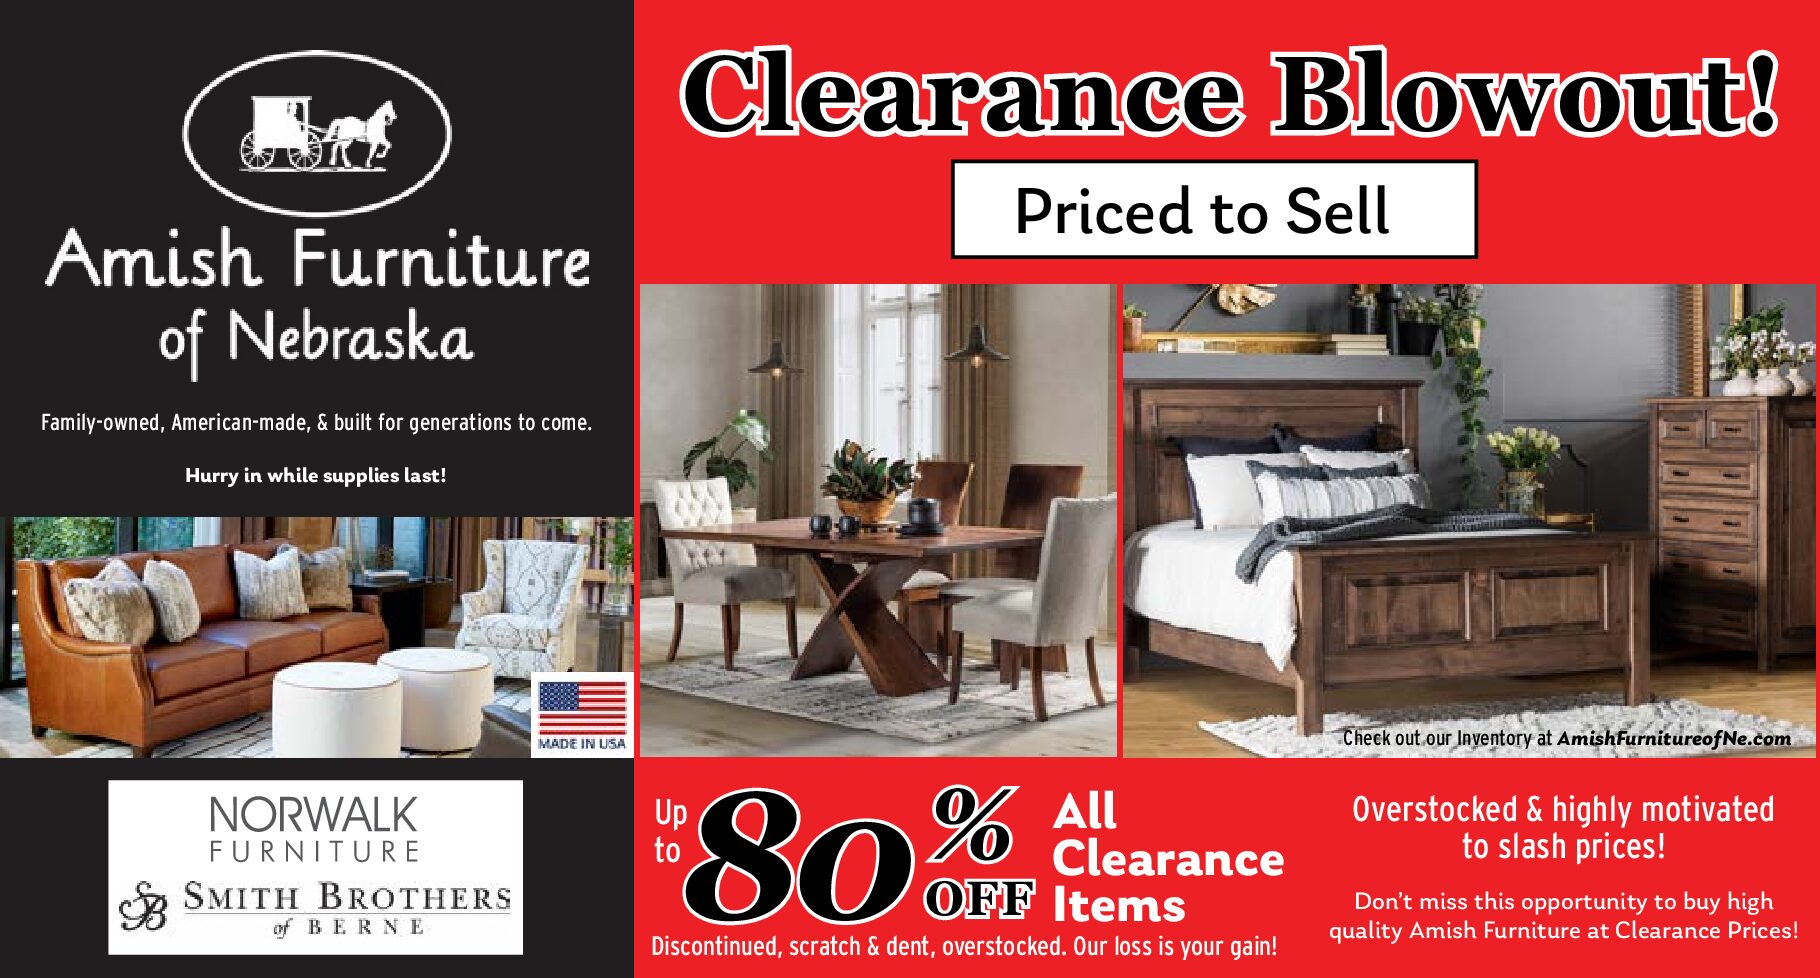 Amish Furniture of Nebraska Clearance Blowout Sale